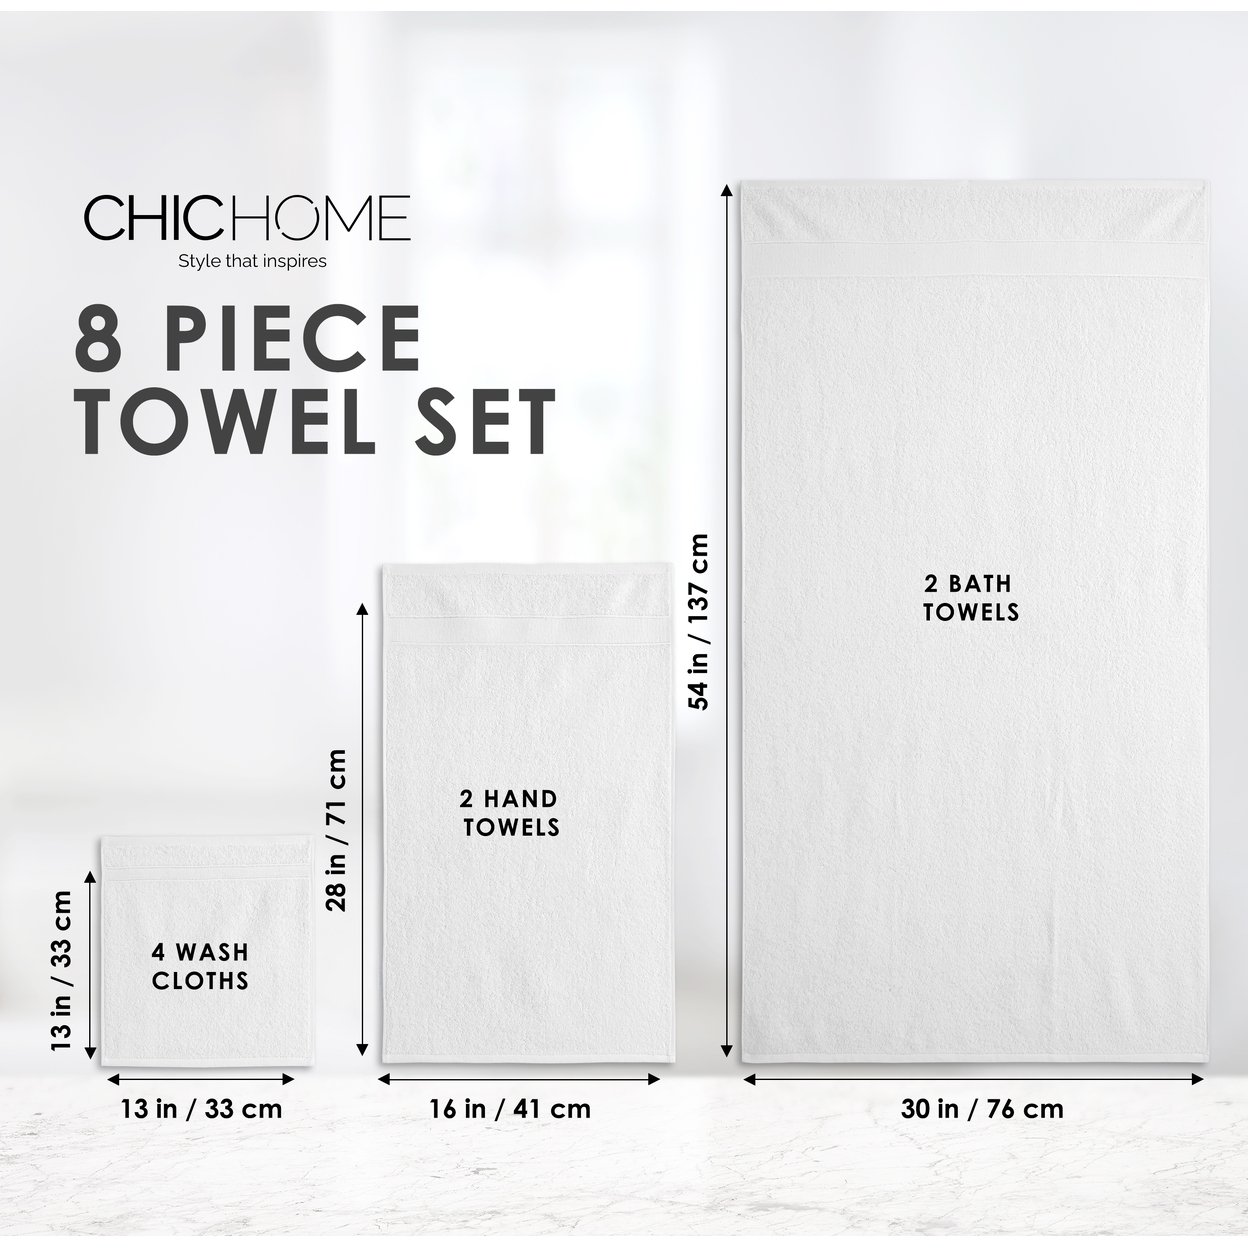 Chic Home Premium 8-Piece 100% Pure Turkish Cotton Towel Set, Woven Dobby Border Design, OEKO-TEX Standard 100 Certified - Charcoal